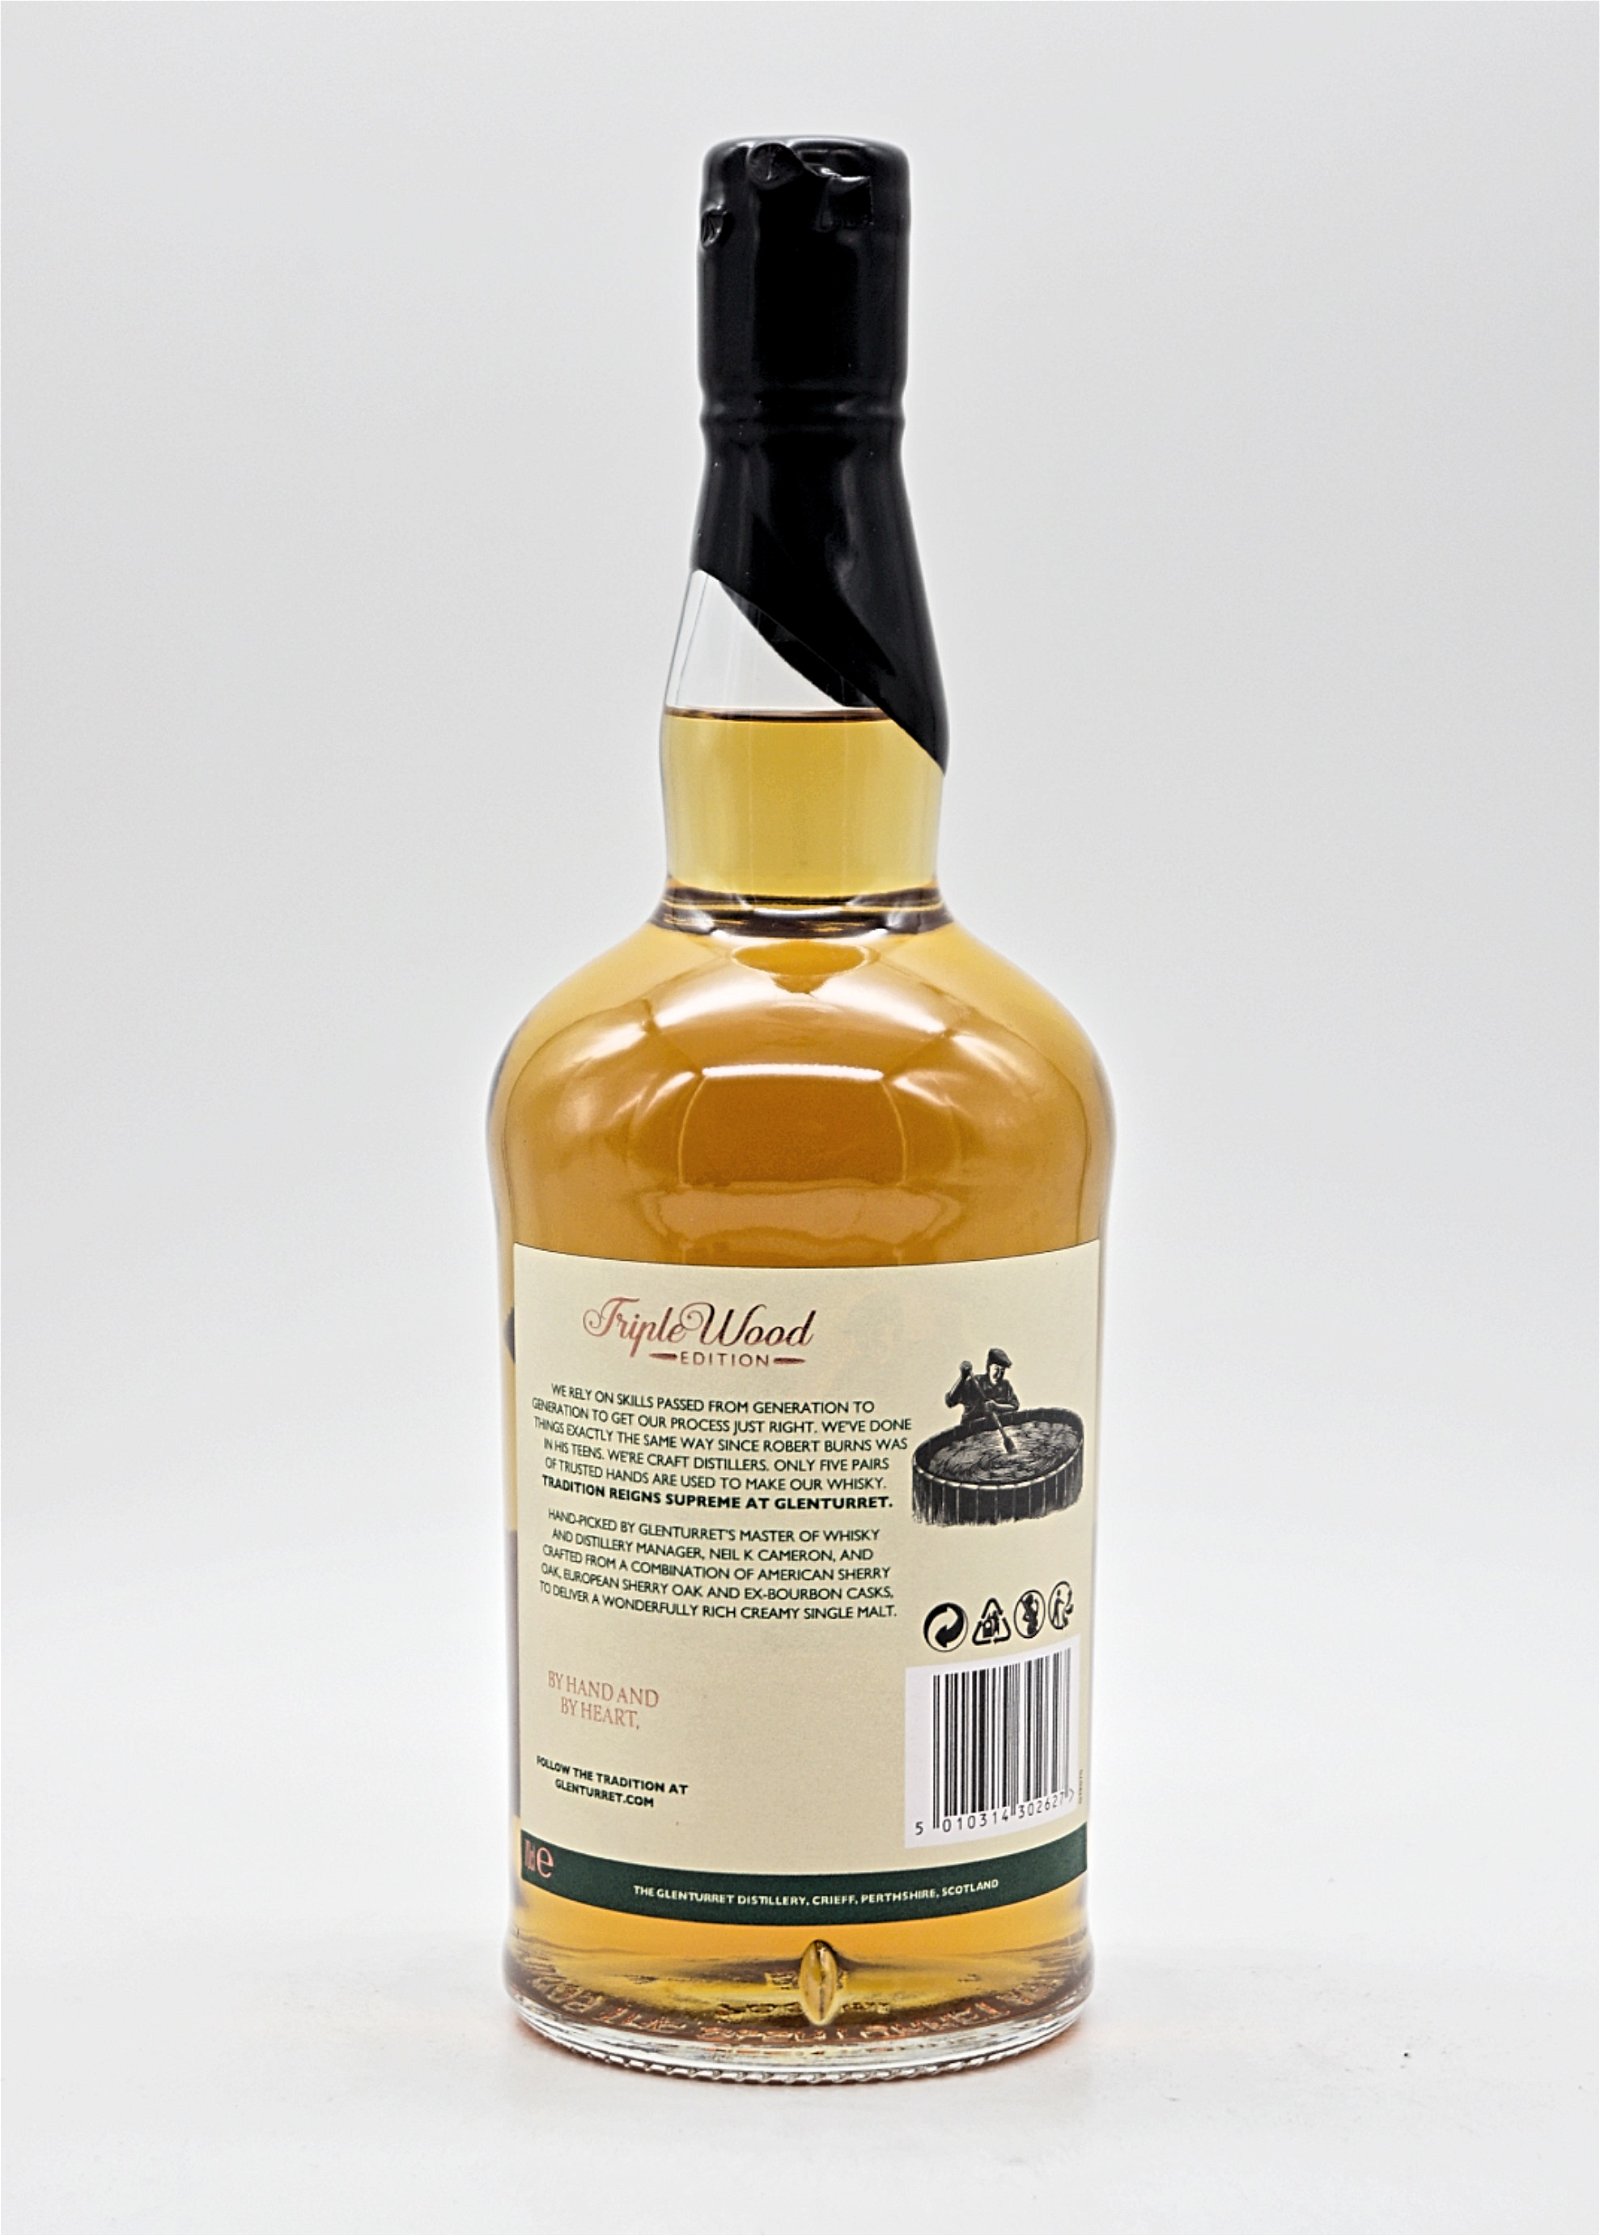 The Glenturret Triple Wood Edition Batch 2 Single Malt Scotch Whisky